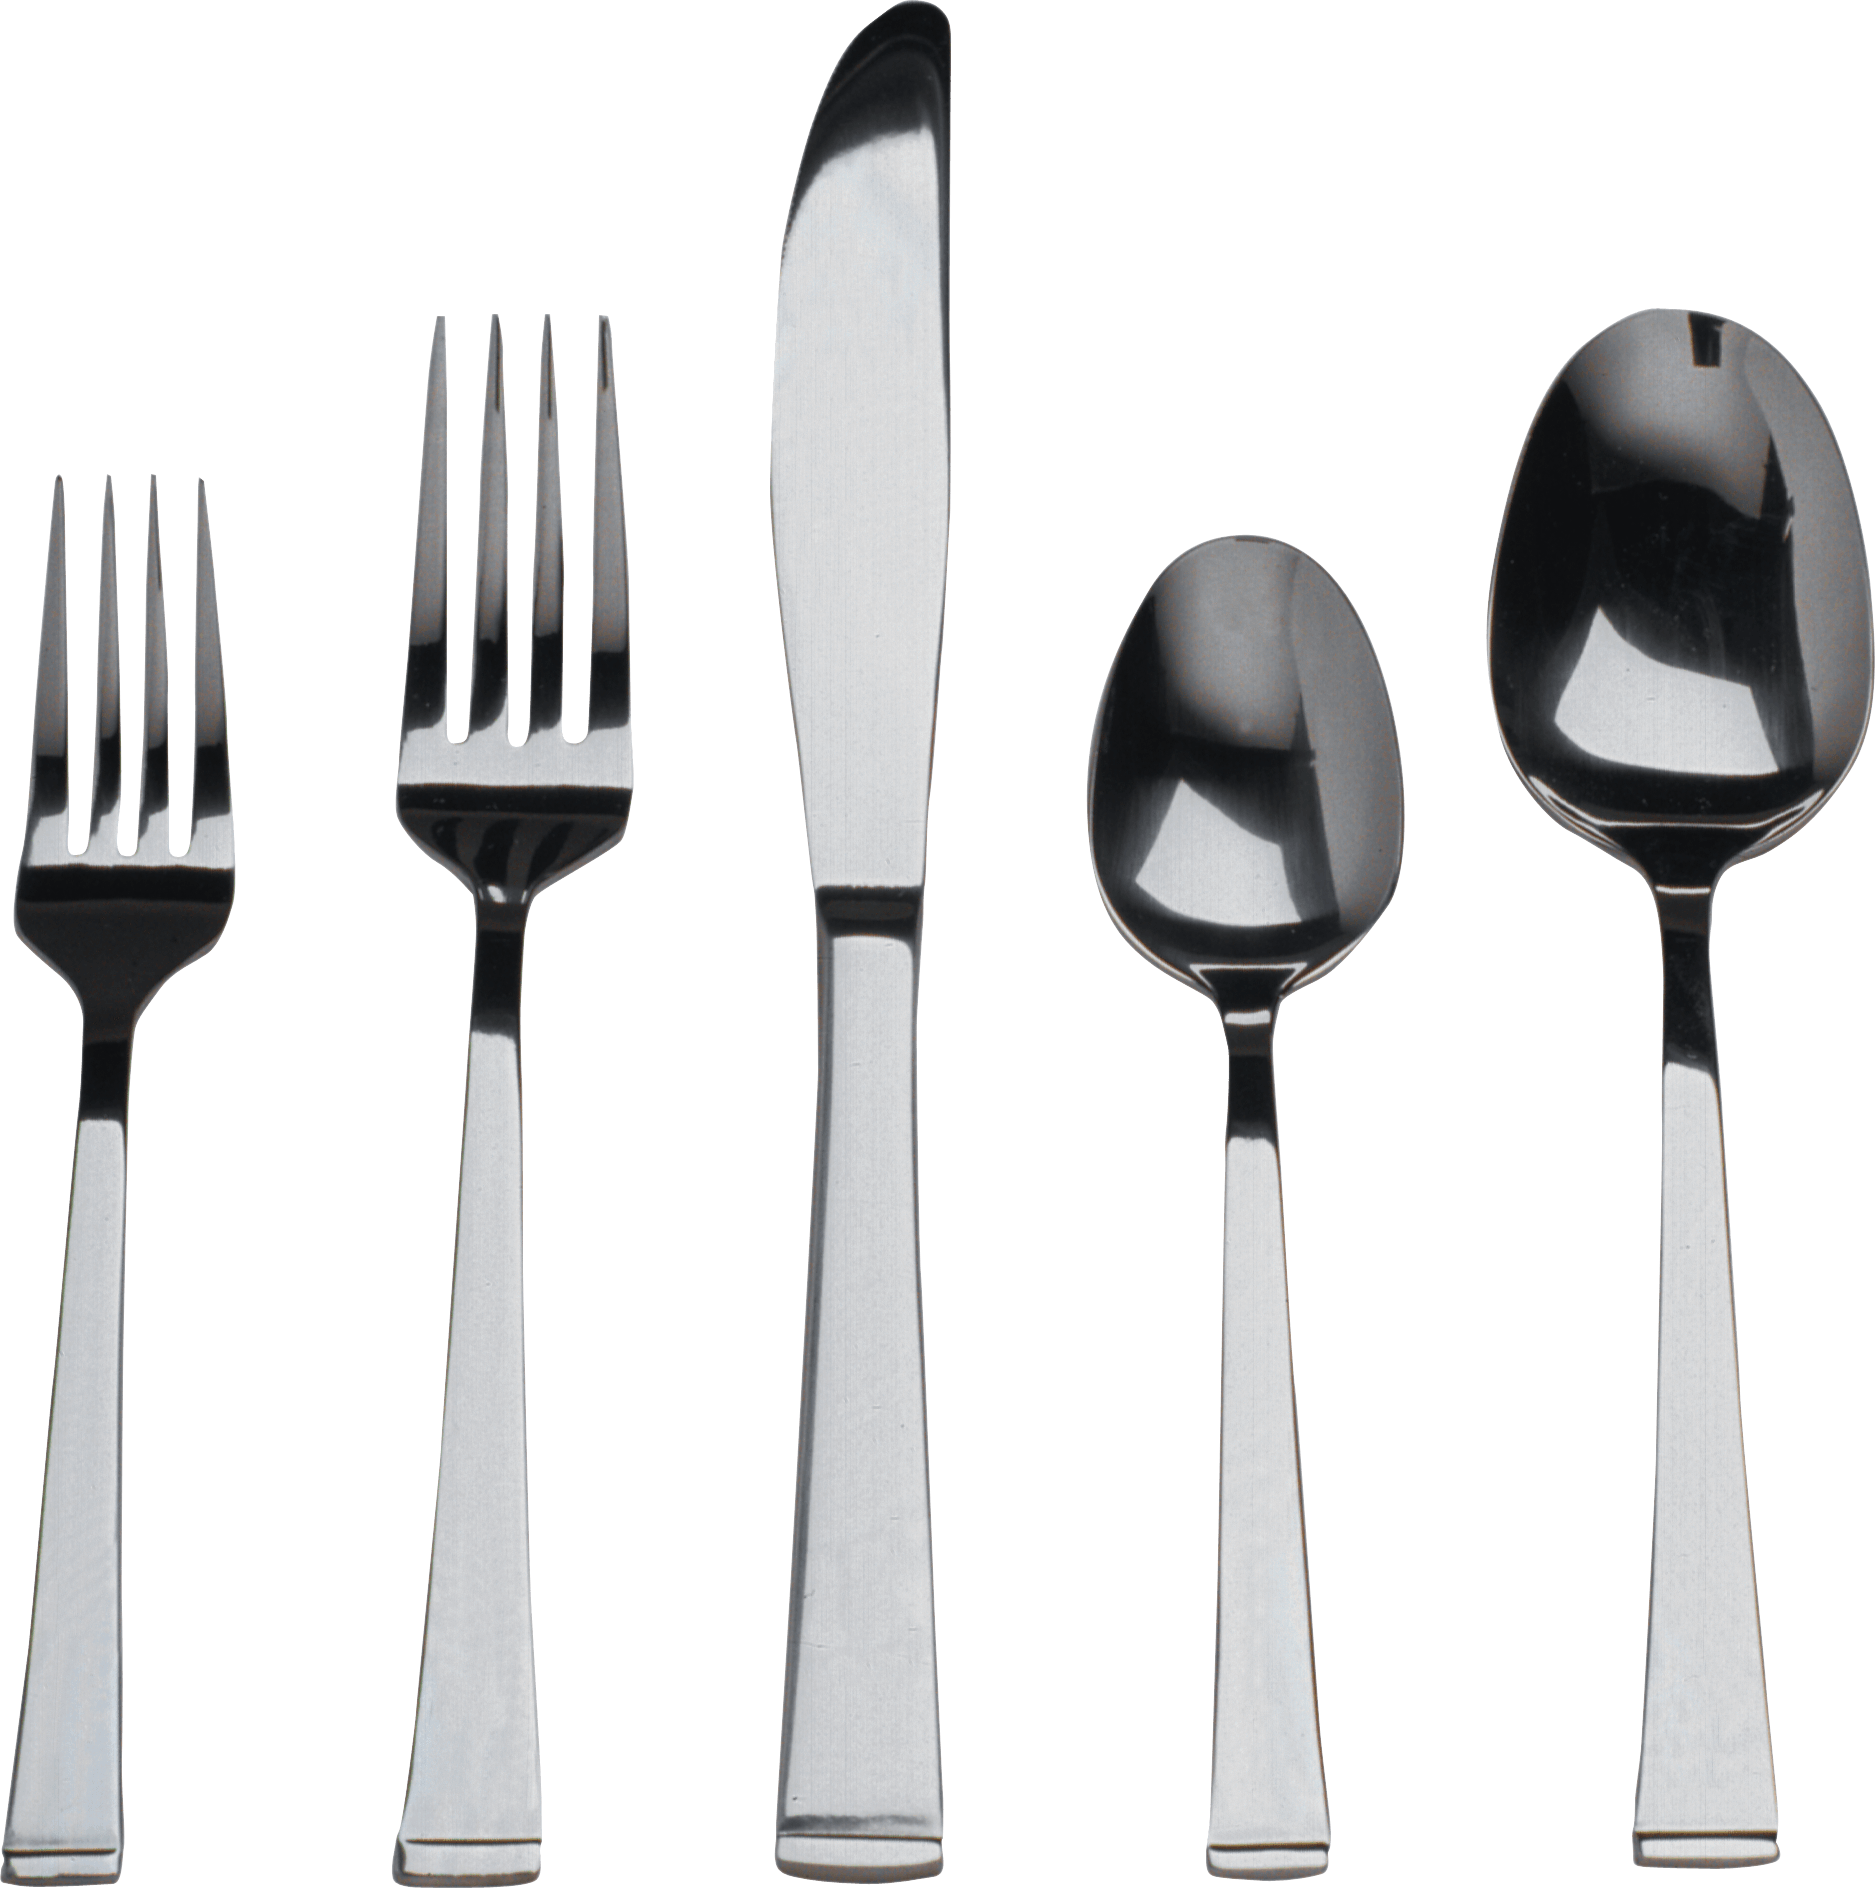 spoon, download spoons forks knives png image png image pngimg #29451